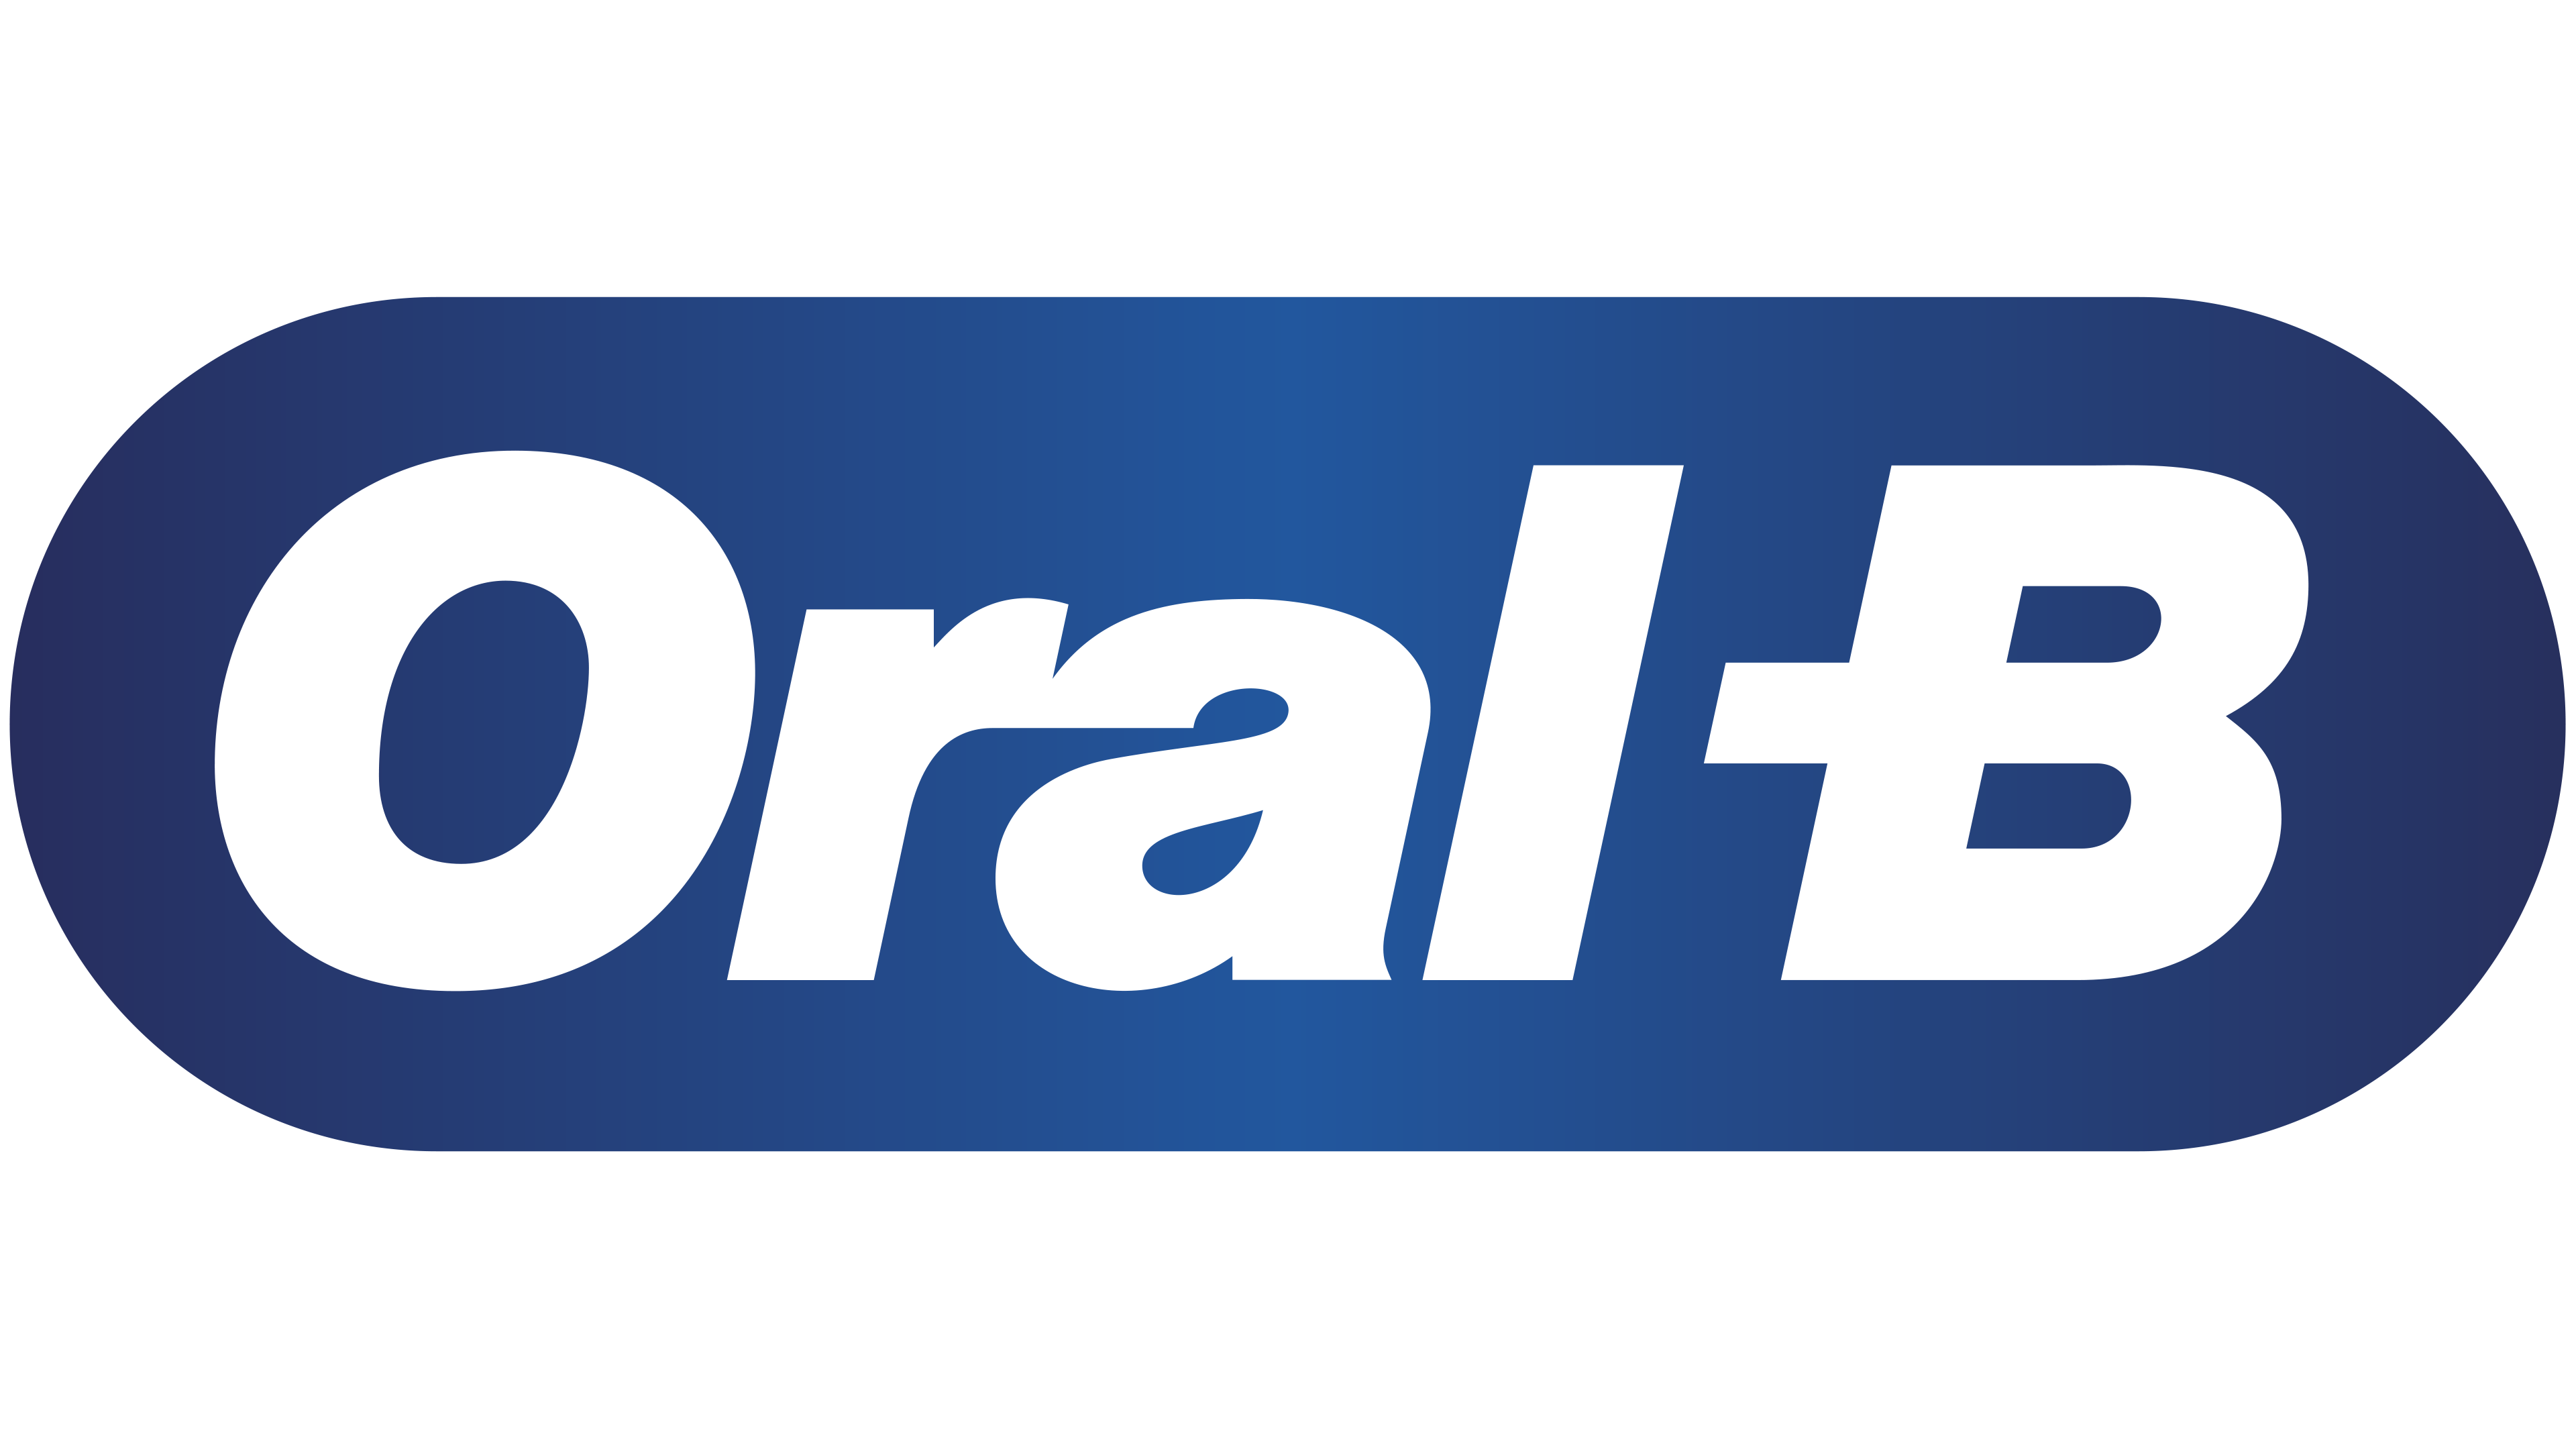 Oral B Logo 2020 present